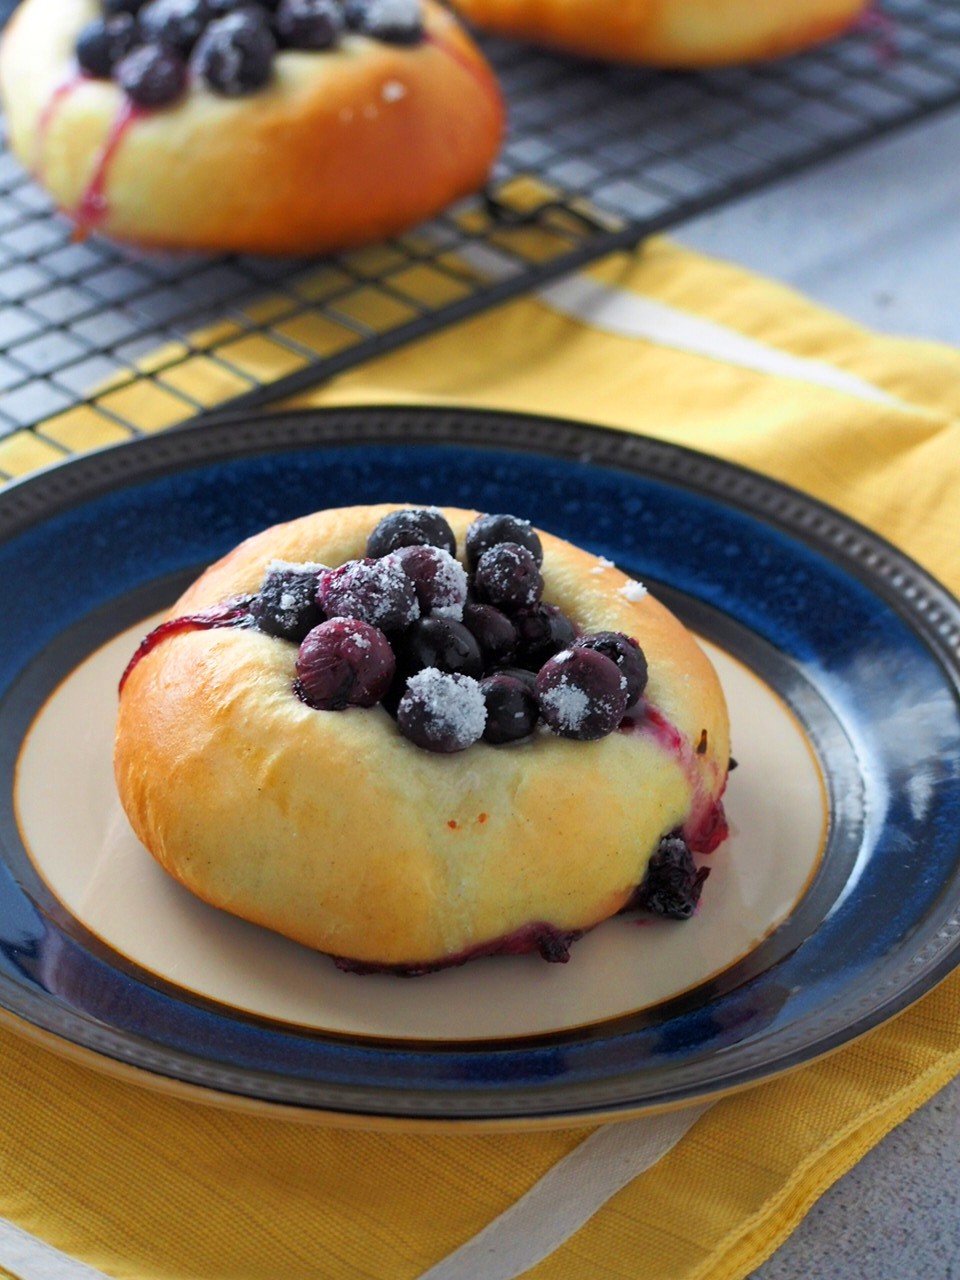 A blueberry bun served on a plate.